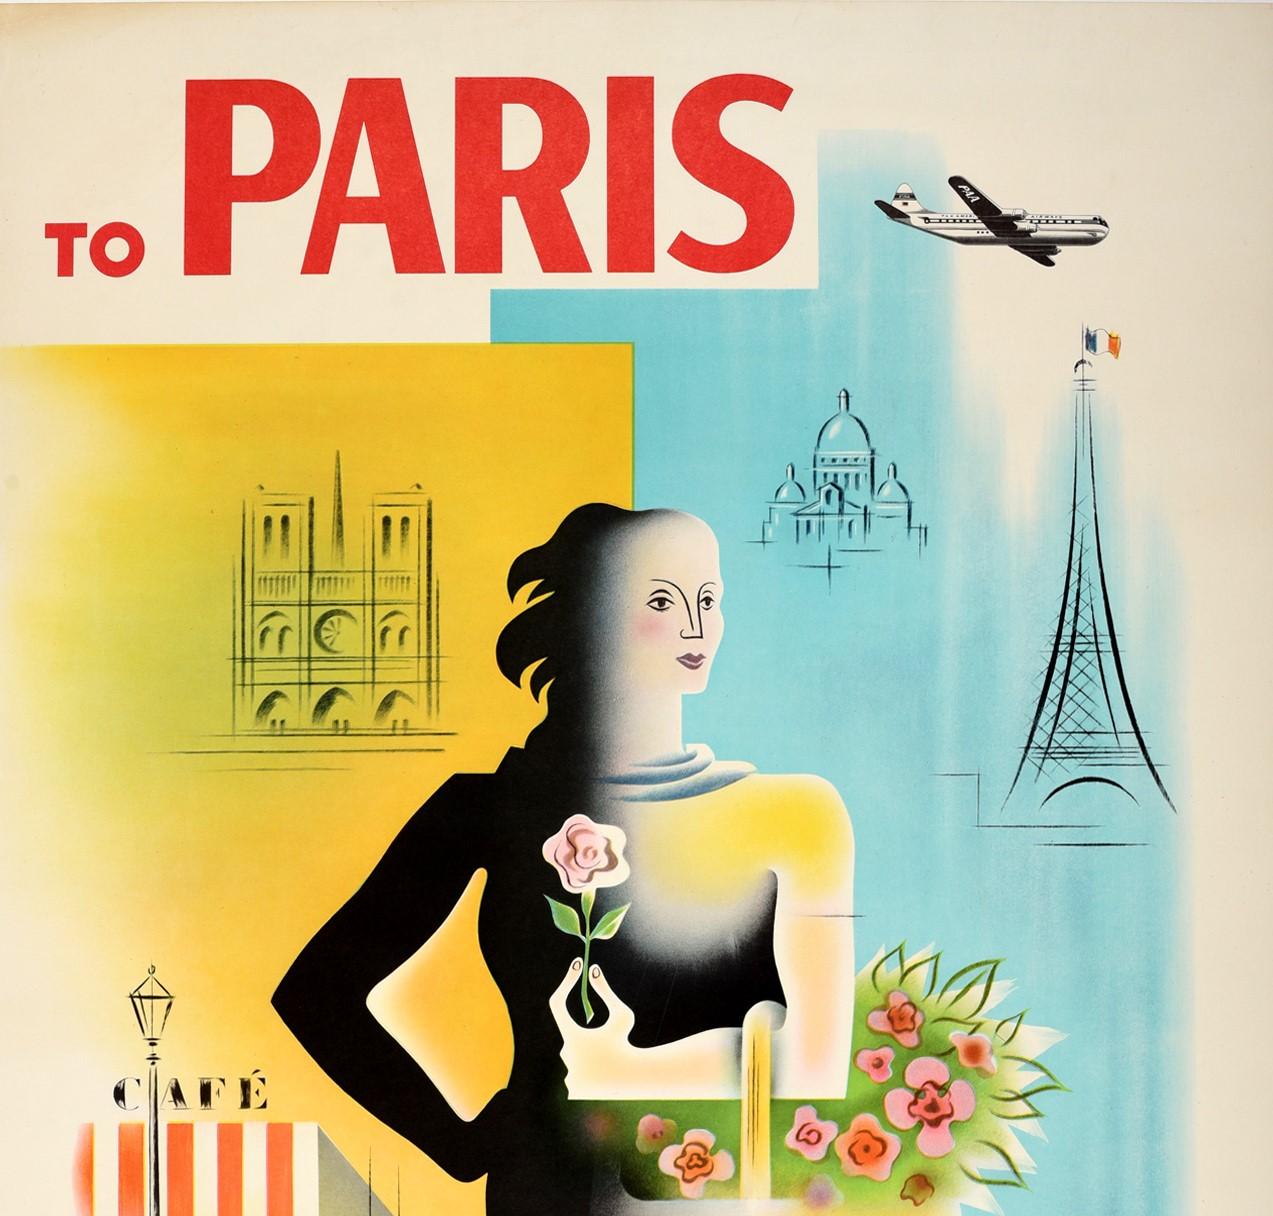 Paris Cathedral of Notre Dame France BEA Vintage Travel Advertisement Poster 